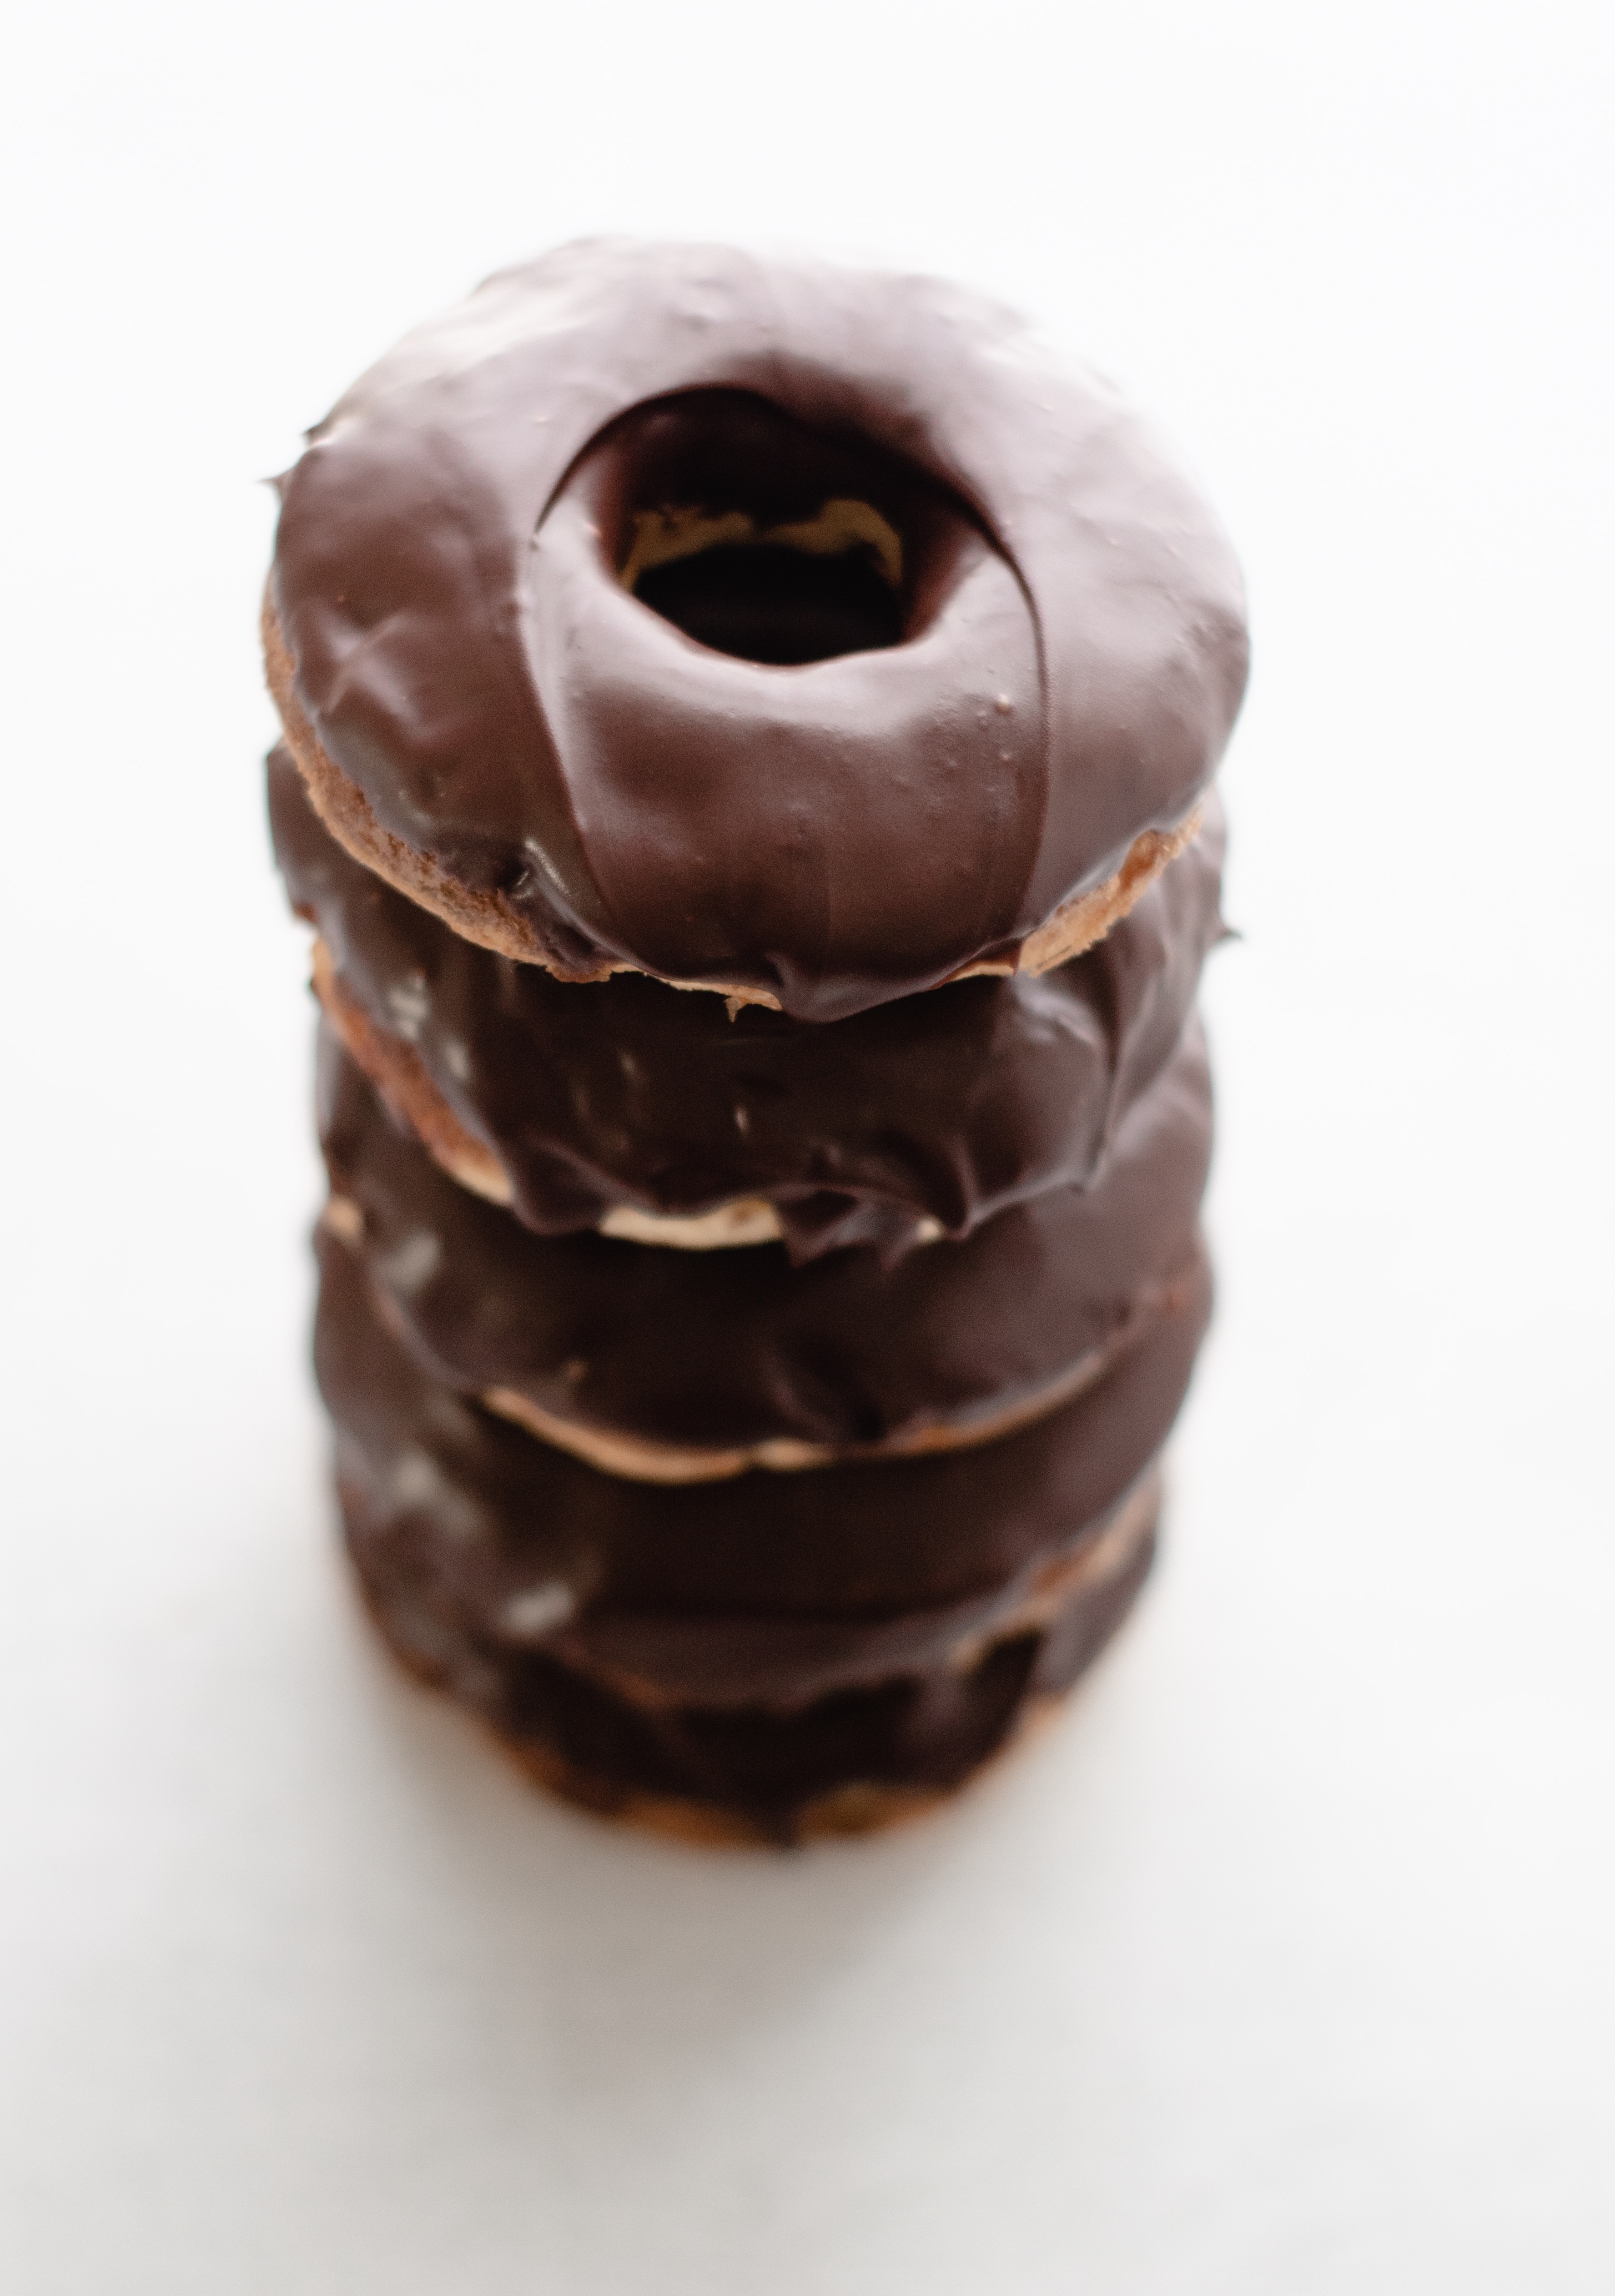 keto chocolate donuts